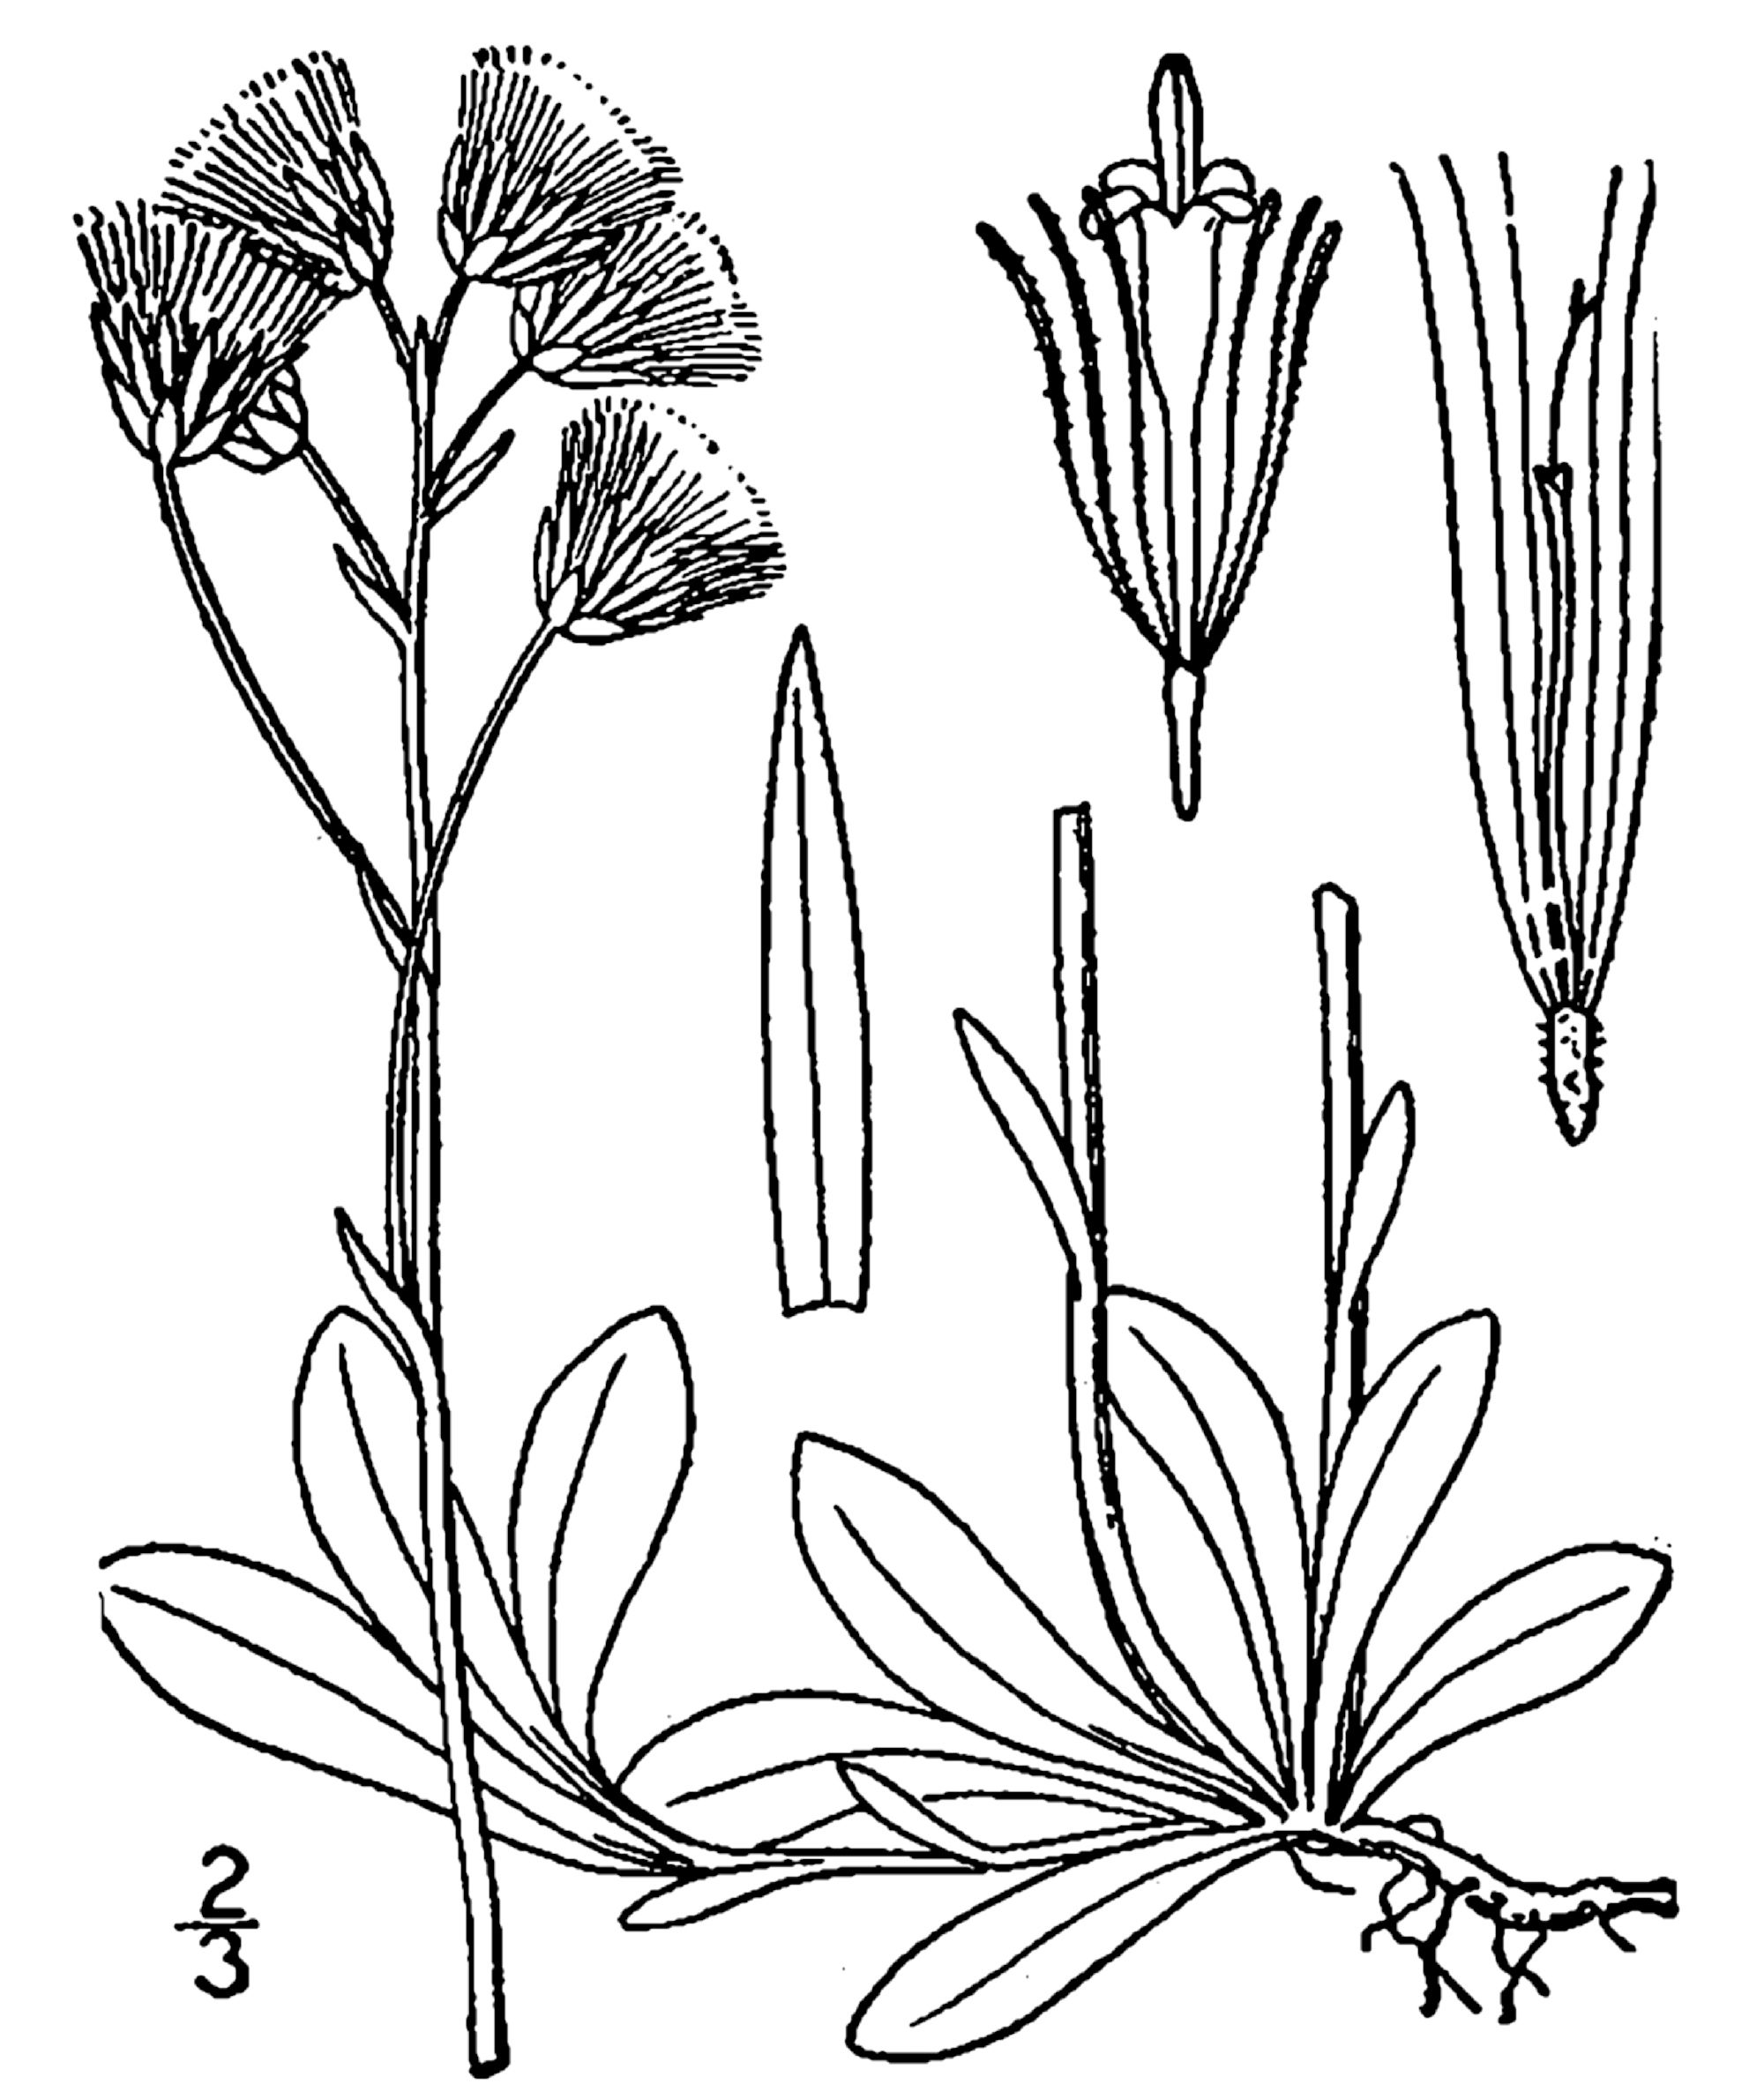 USDA Field Pussytoes botanical illustration circa 1913..